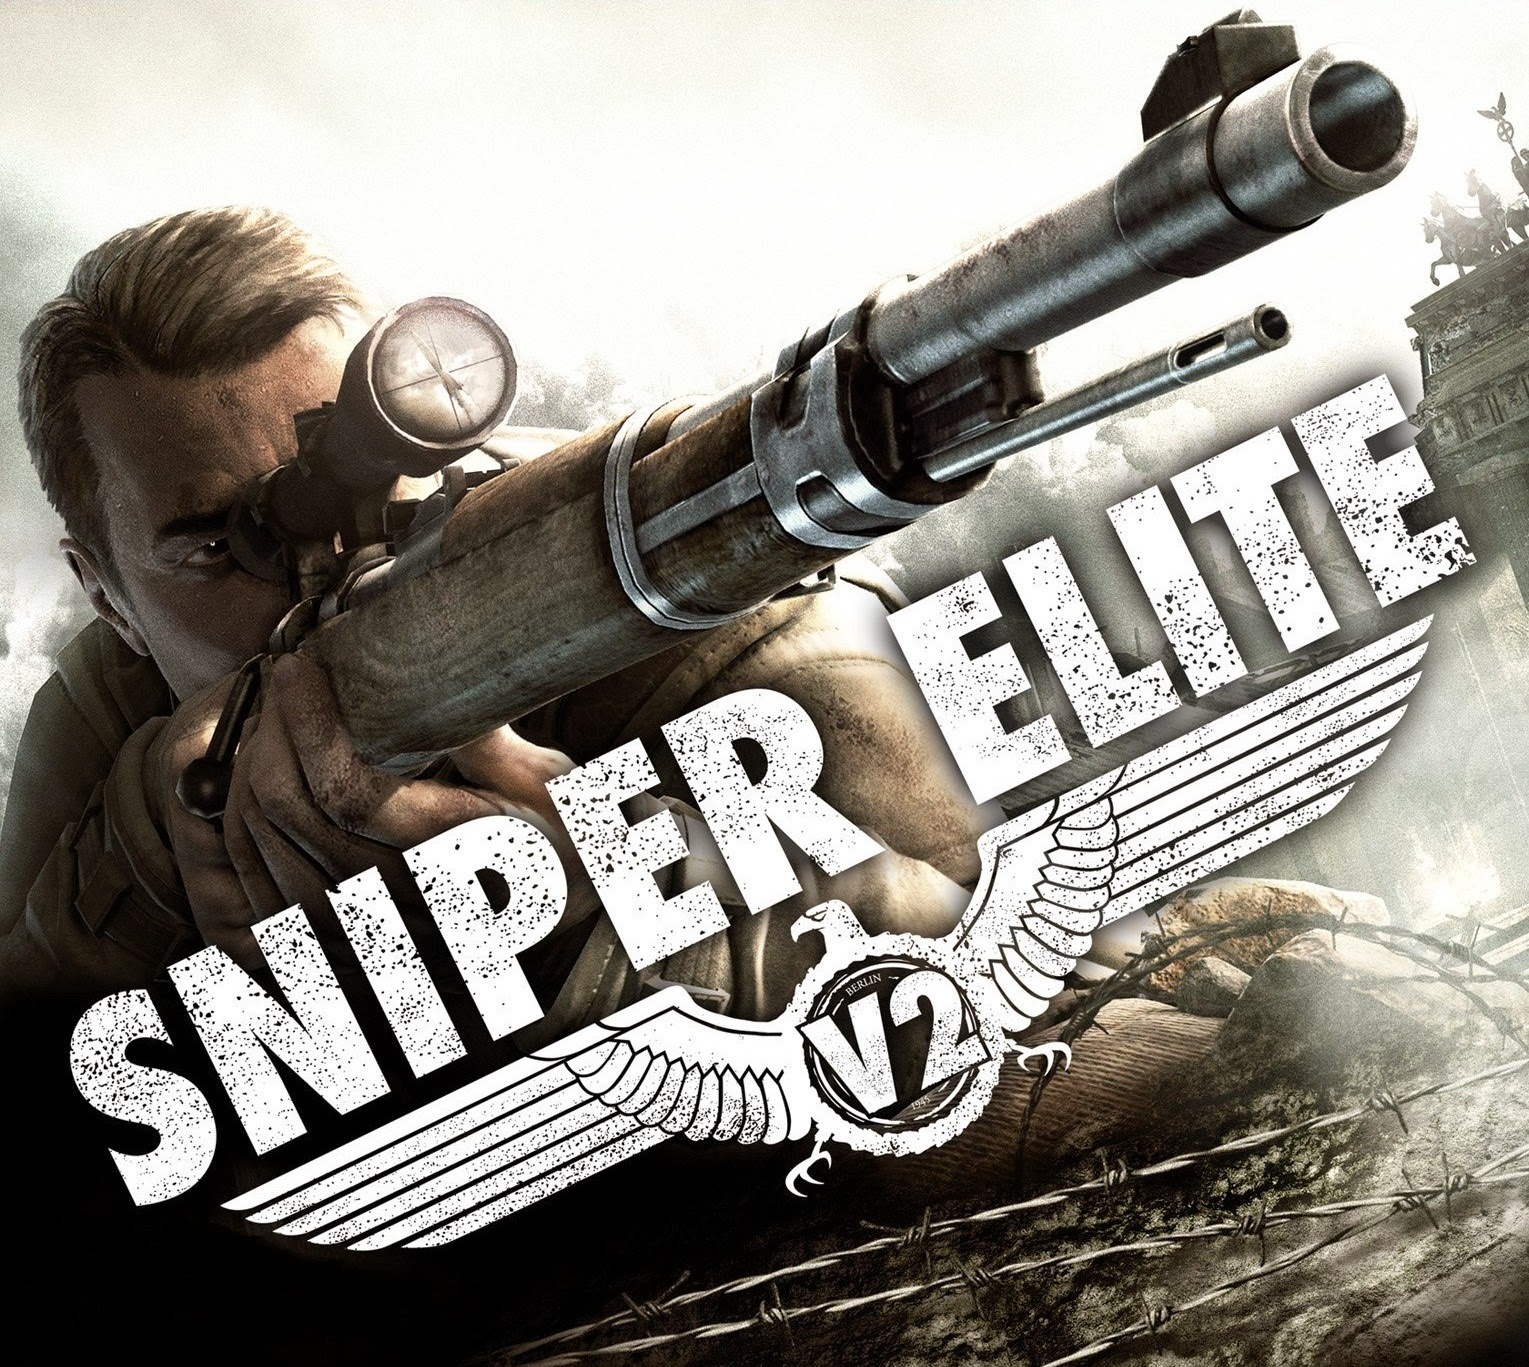 sniper software free download